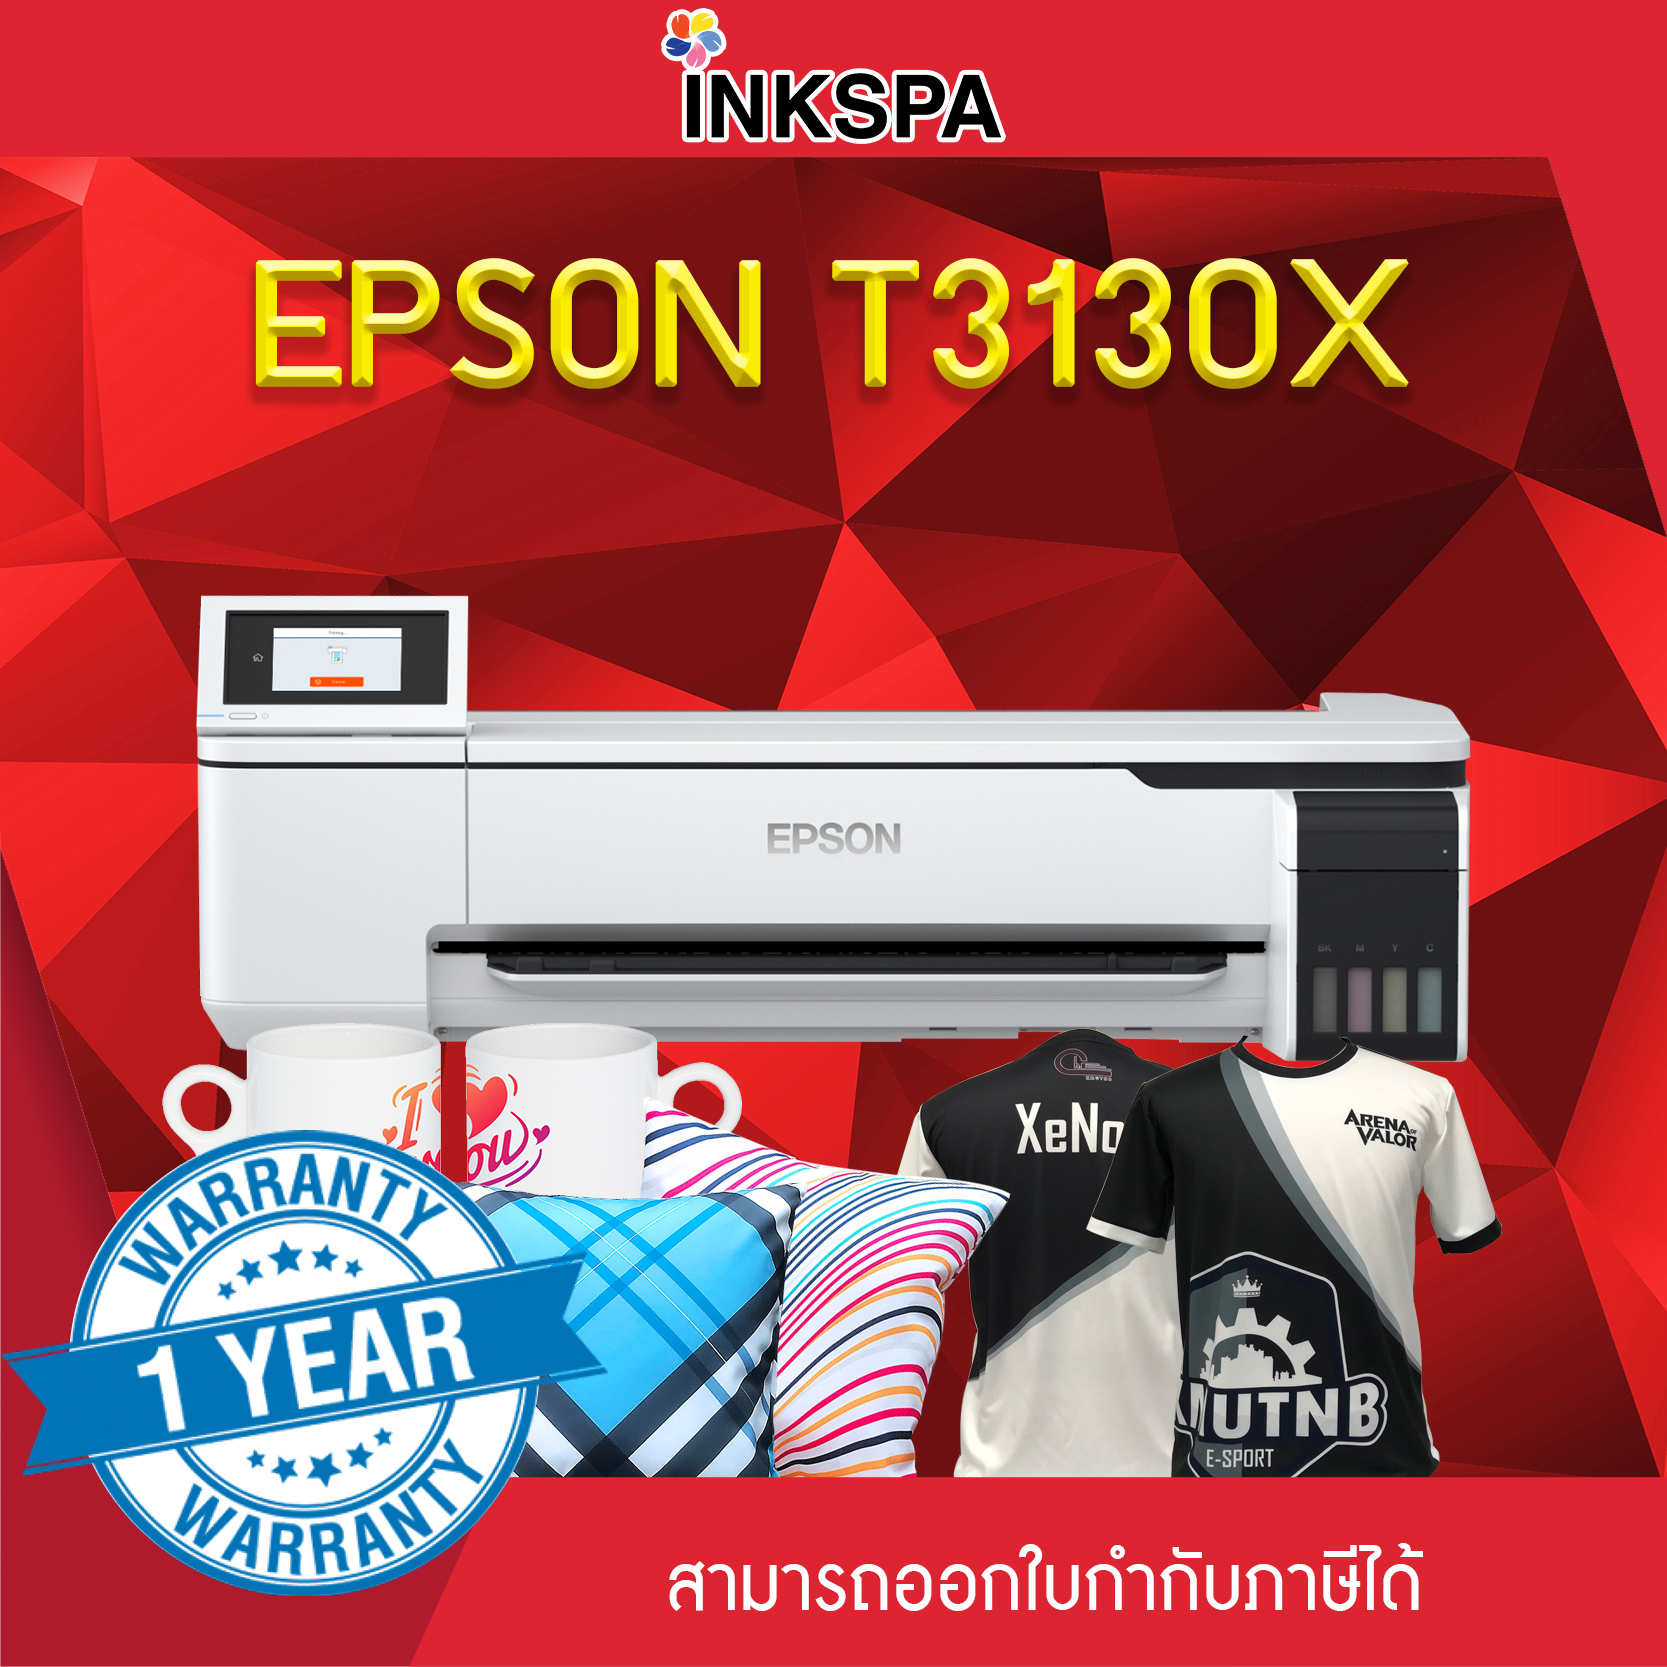 epson t3130x, เครื่องพิมพ์ซับ , เครื่องสกรีน ,เครื่องพิมพ์เสื้อ,เครื่องพิมพ์ตั้งโต๊ะ , เครื่องพิมพ์เอ1, t3100x , เครื่องพิมพ์หน้ากว้าง , ปริ้นเตอร์ซับลิเมชั่น